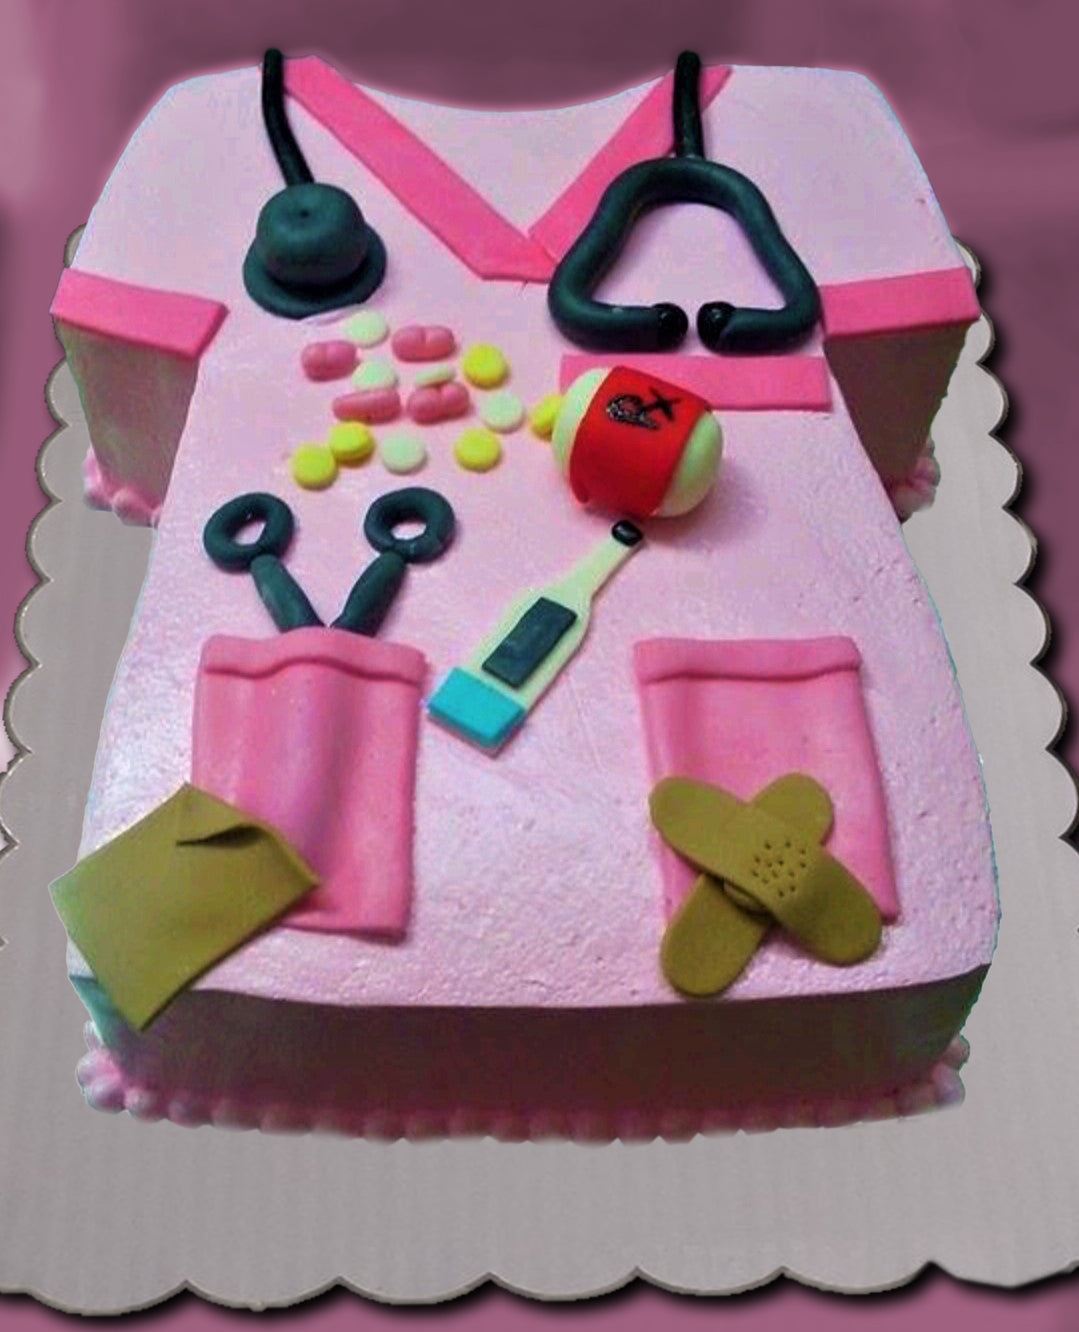 Happy Birthday Nurse Cakes, Cards, Wishes